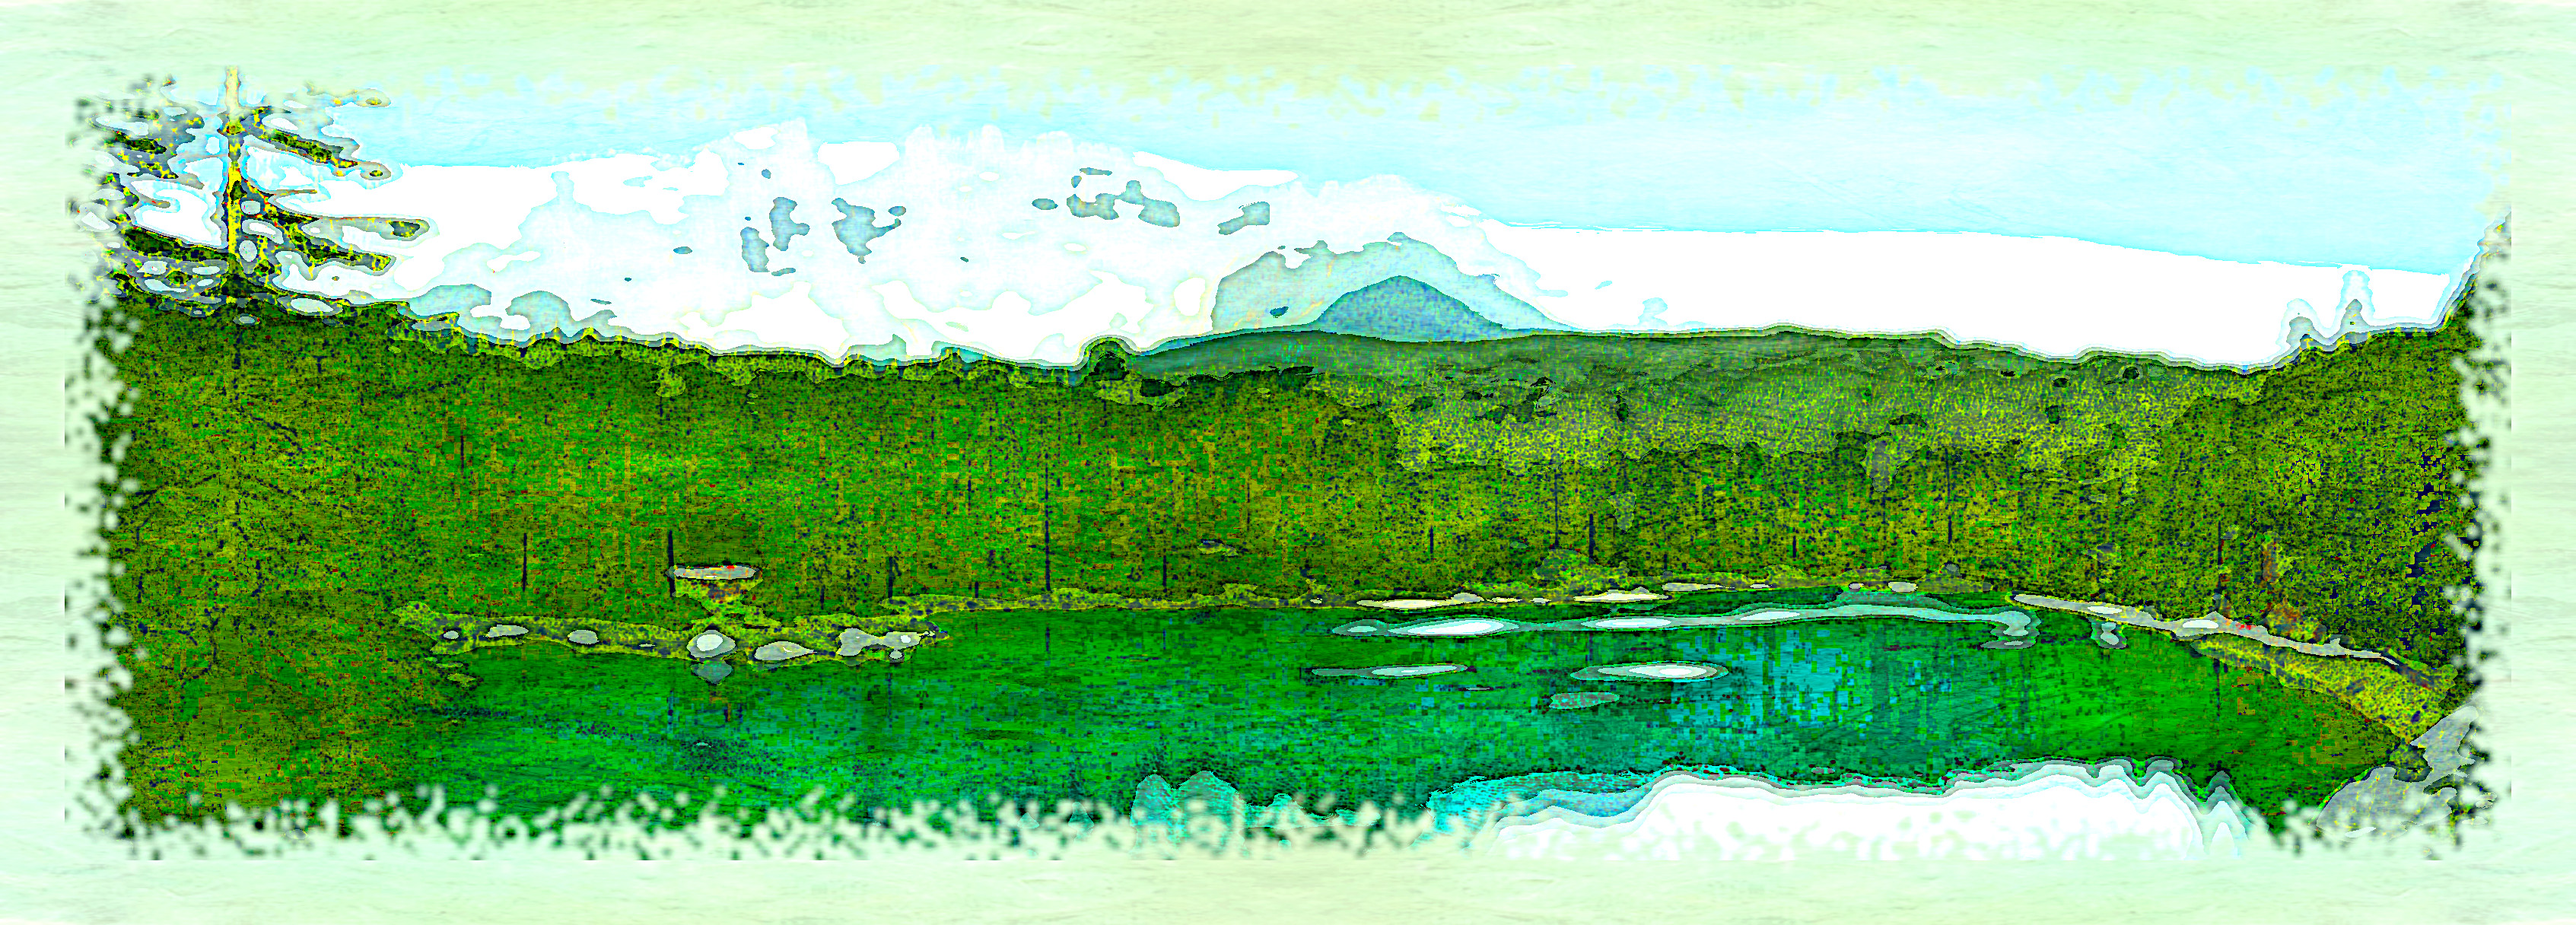 2019-04-03 05-55-39 Dolomiti_2011_Pana_20110708_327-31_ICEstitch as a simple aquarel, using 12 colours.jpg